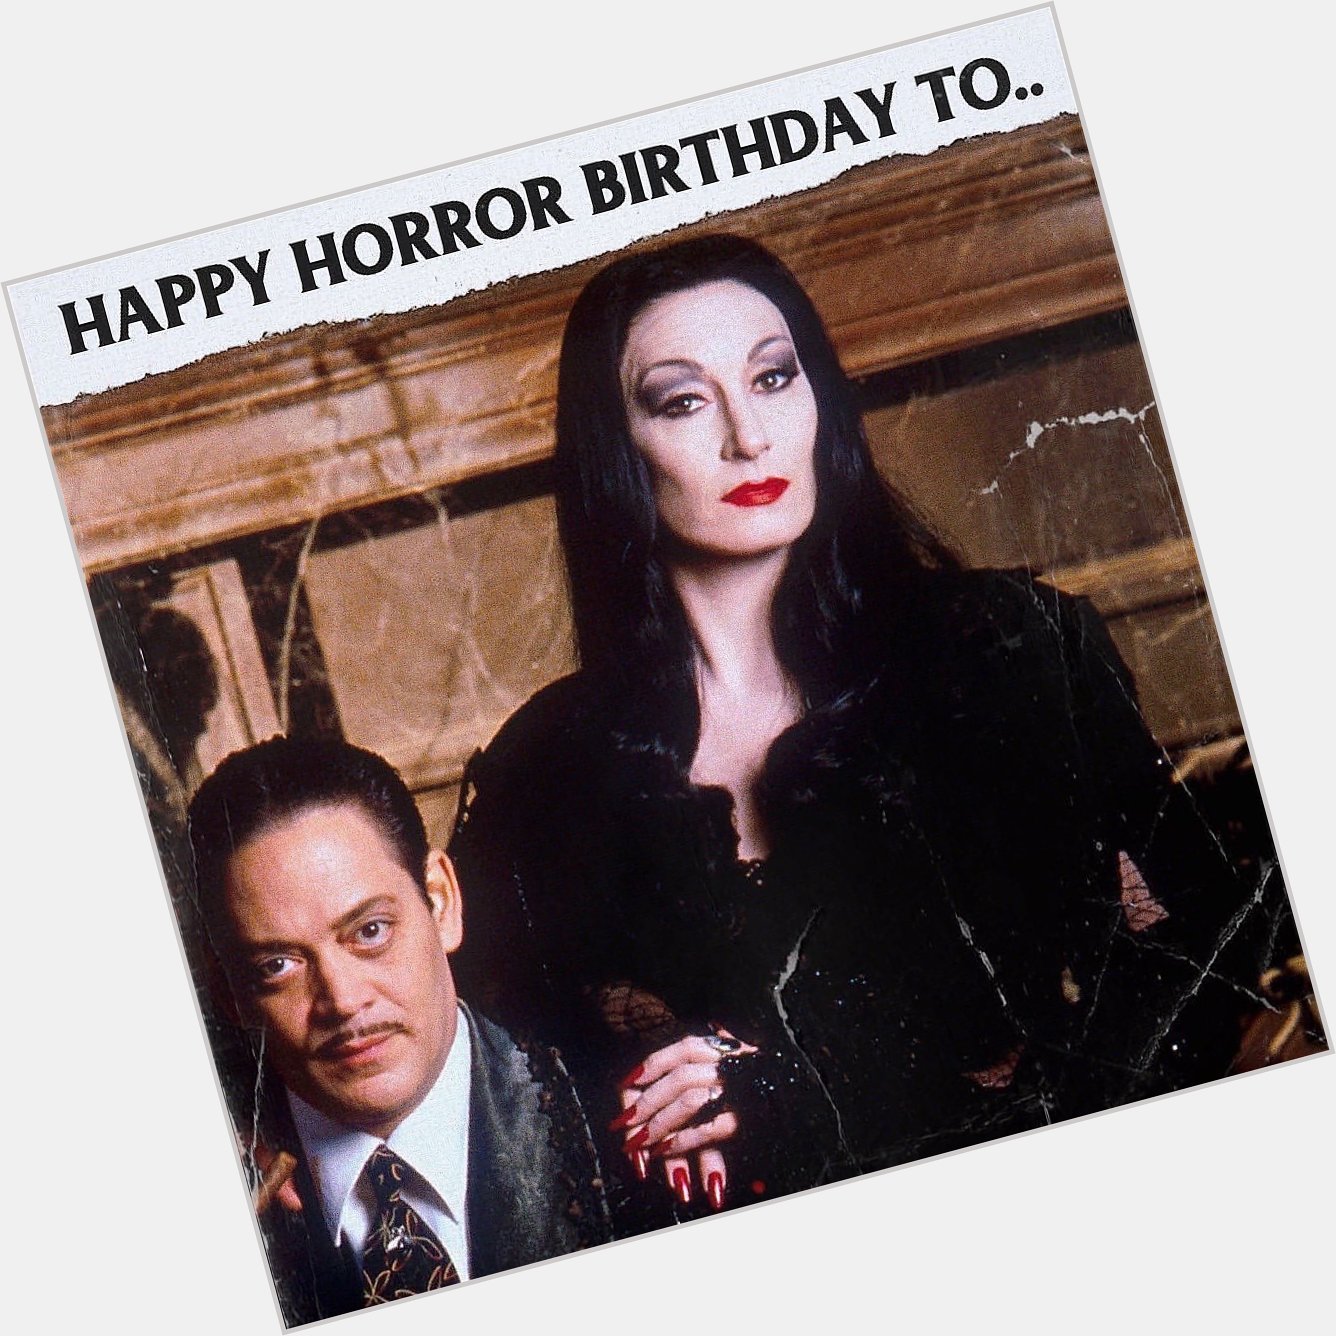 A Happy Horror Birthday to ANJELICA HUSTON - born in 1951! 